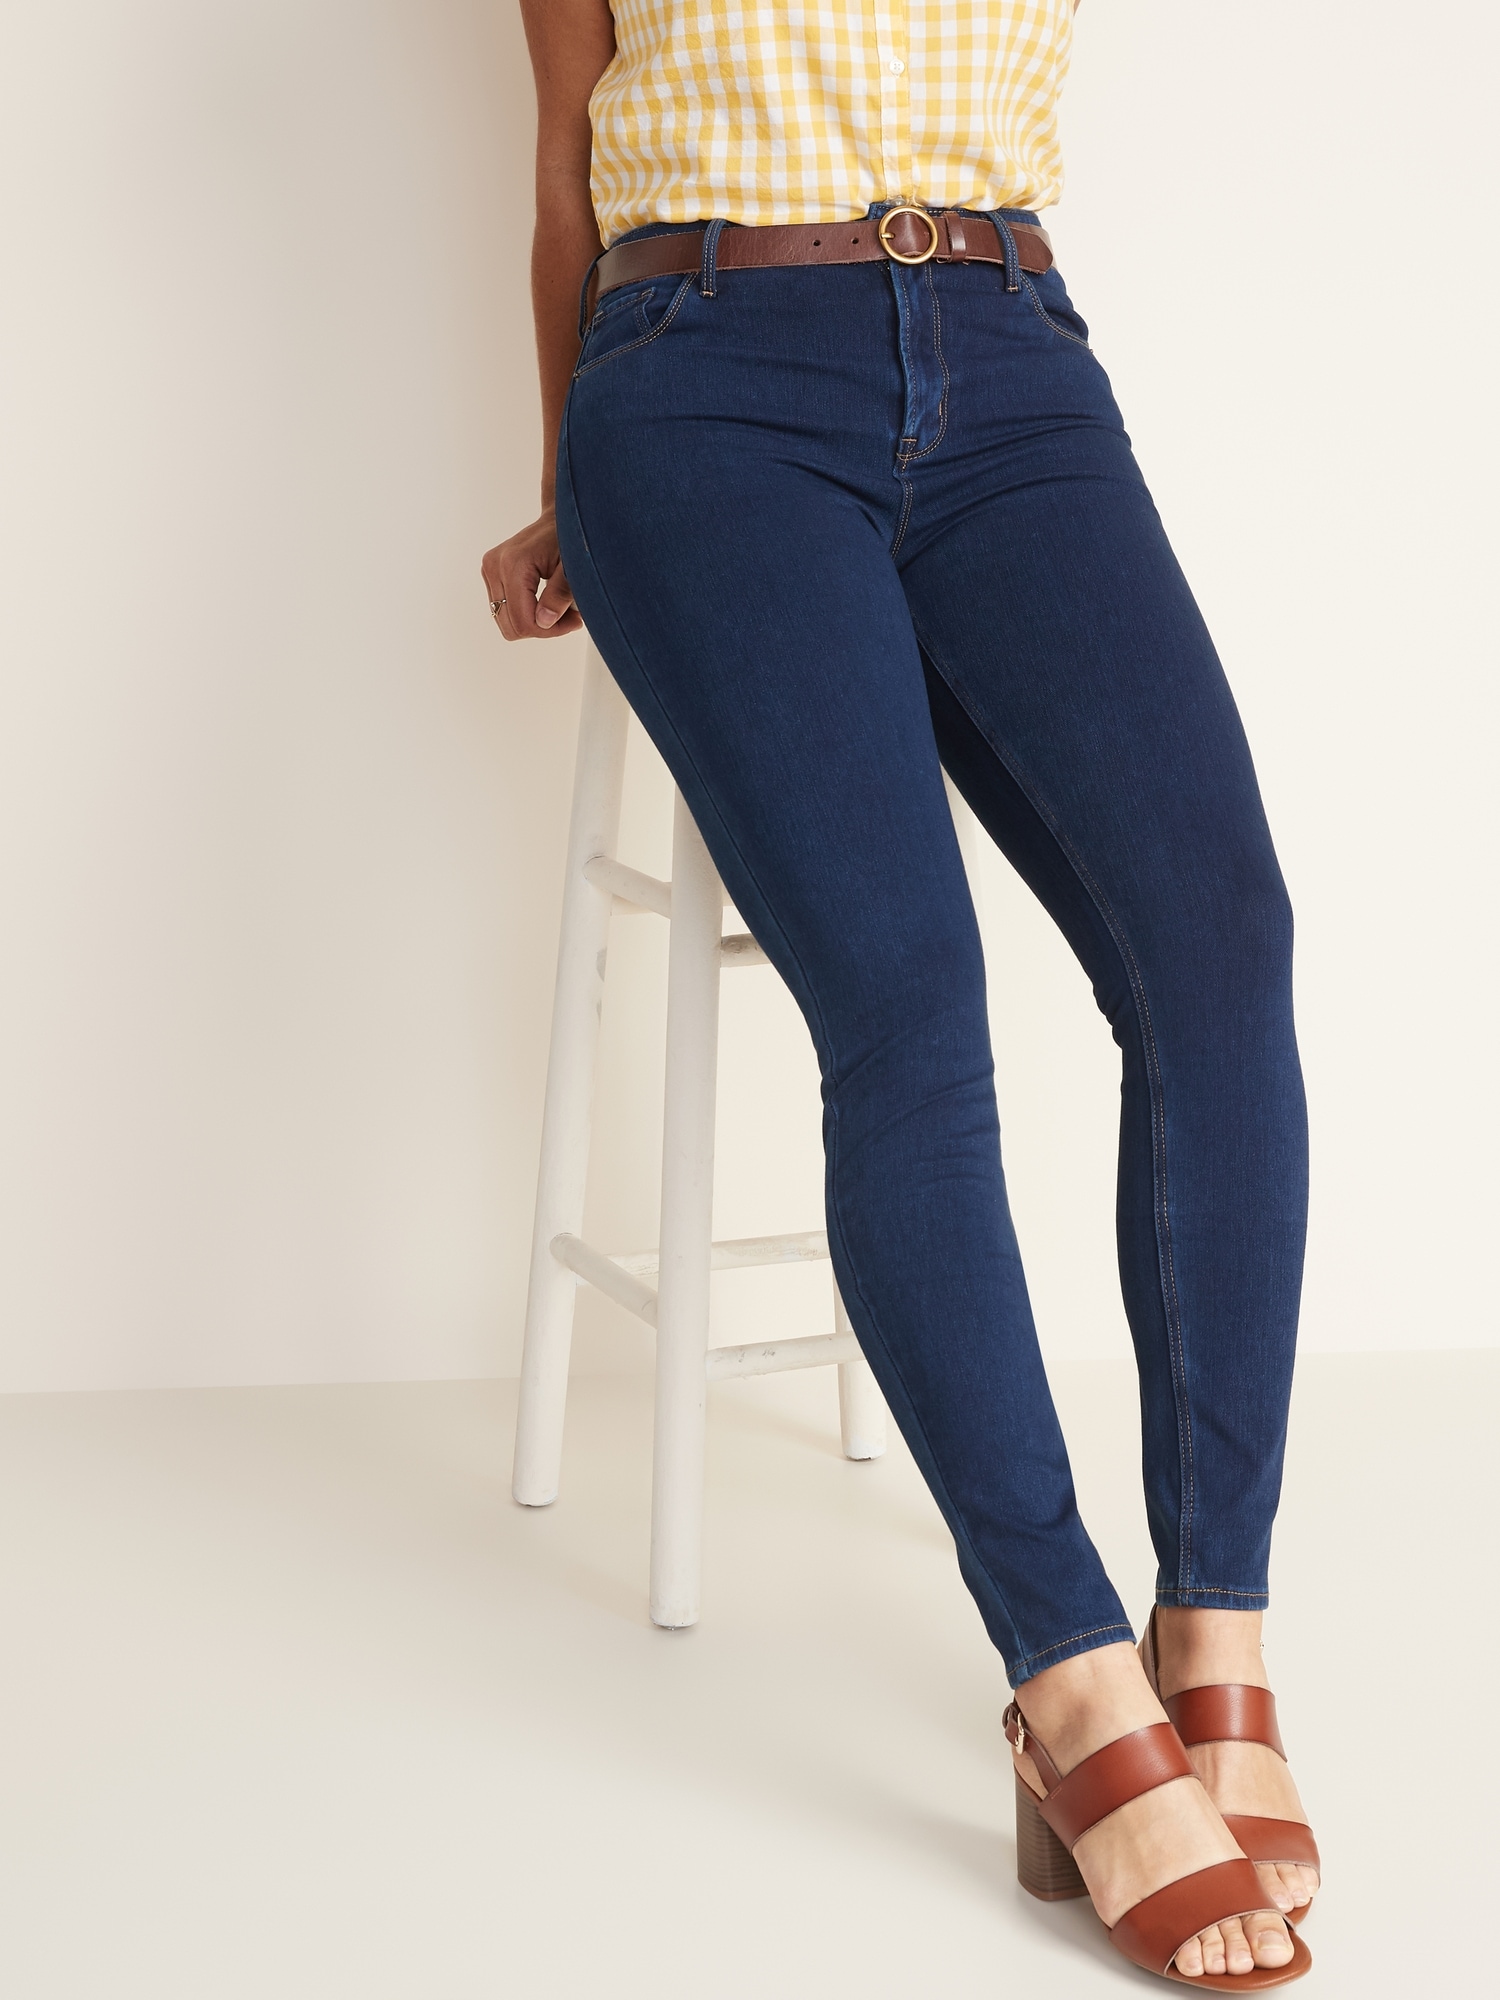 gap always skinny jeans discontinued